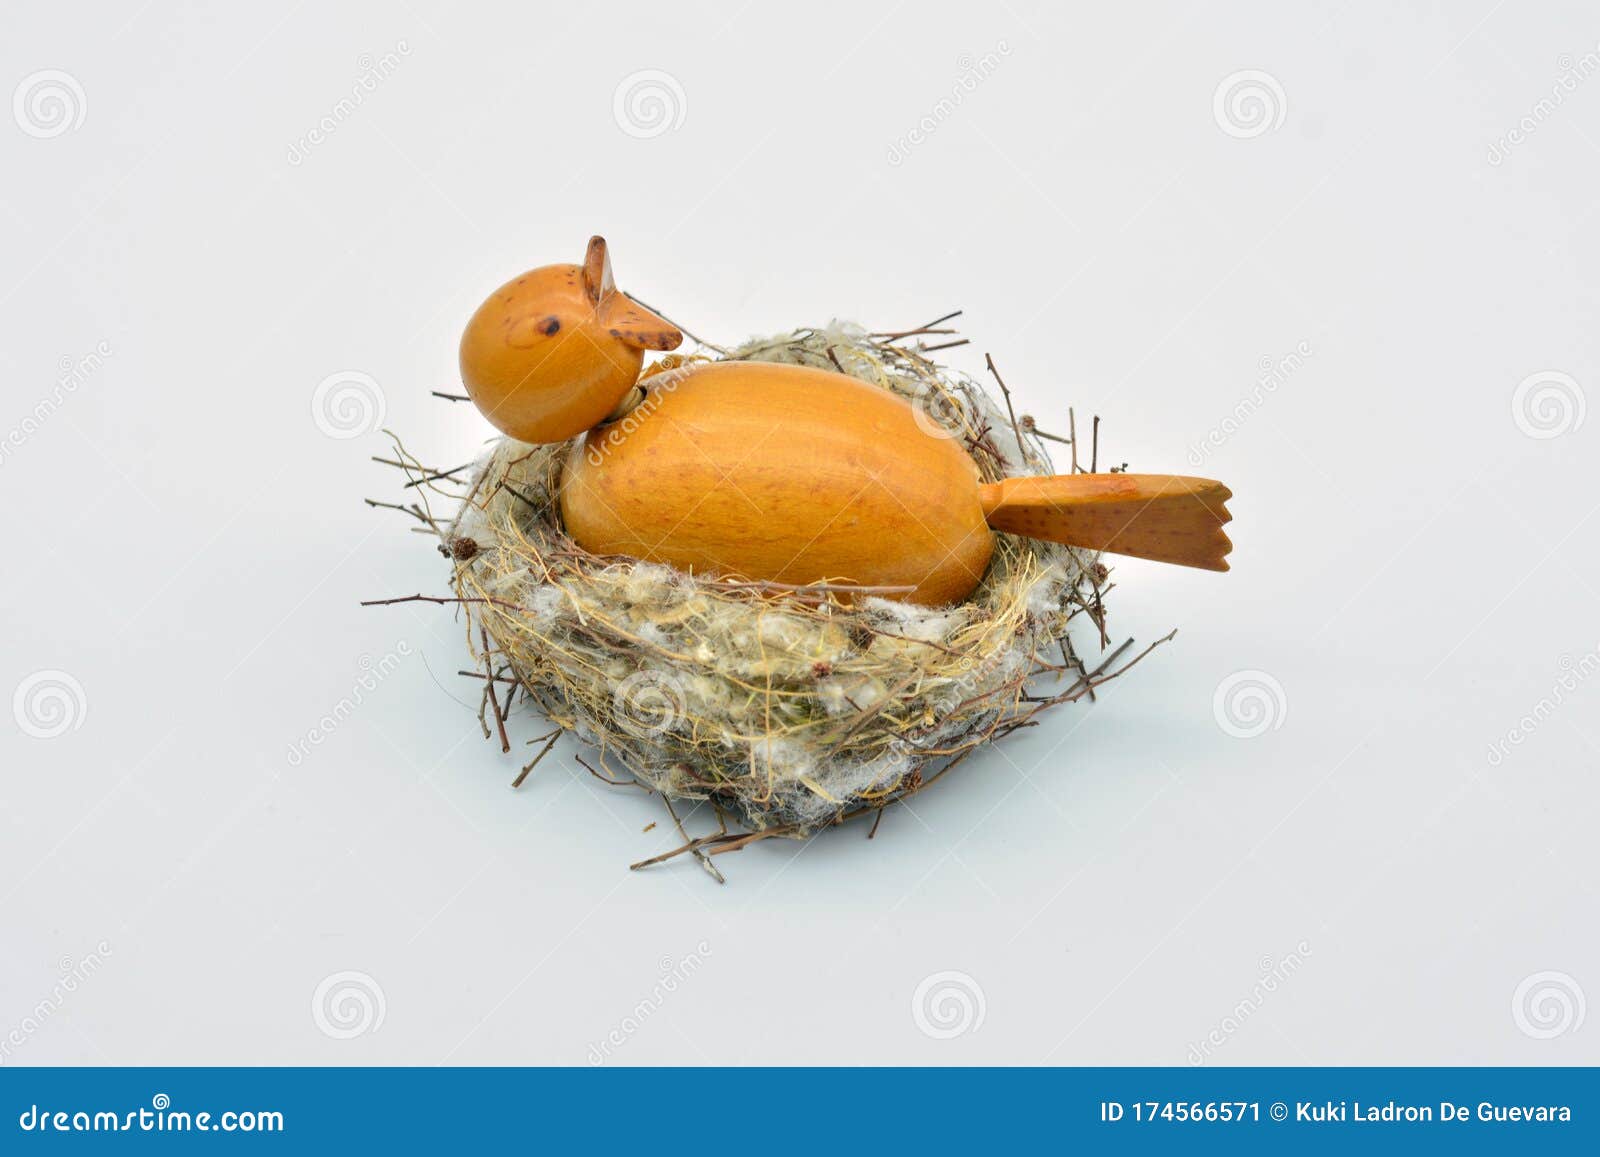 bird made of wood on a natural nest